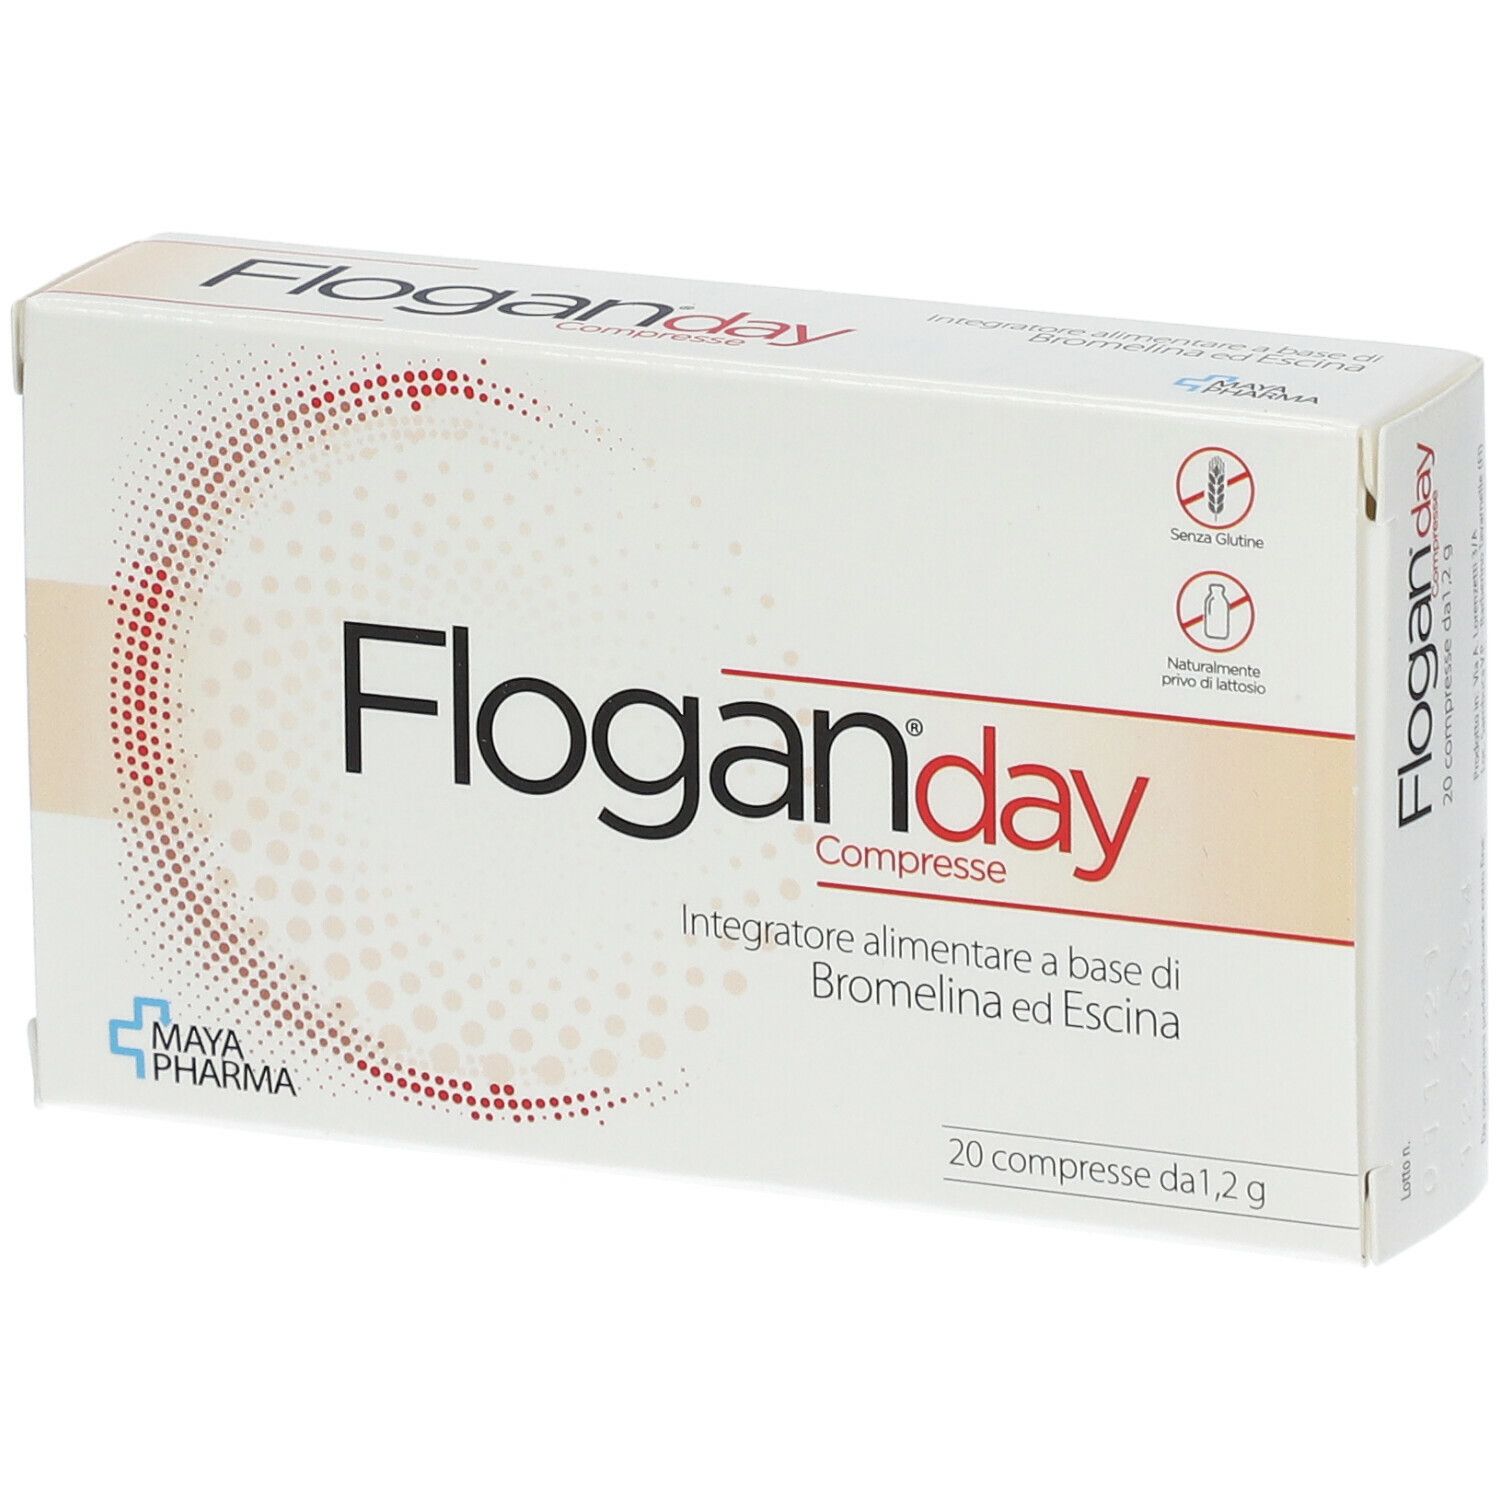 Image of Flogan® Day Compresse